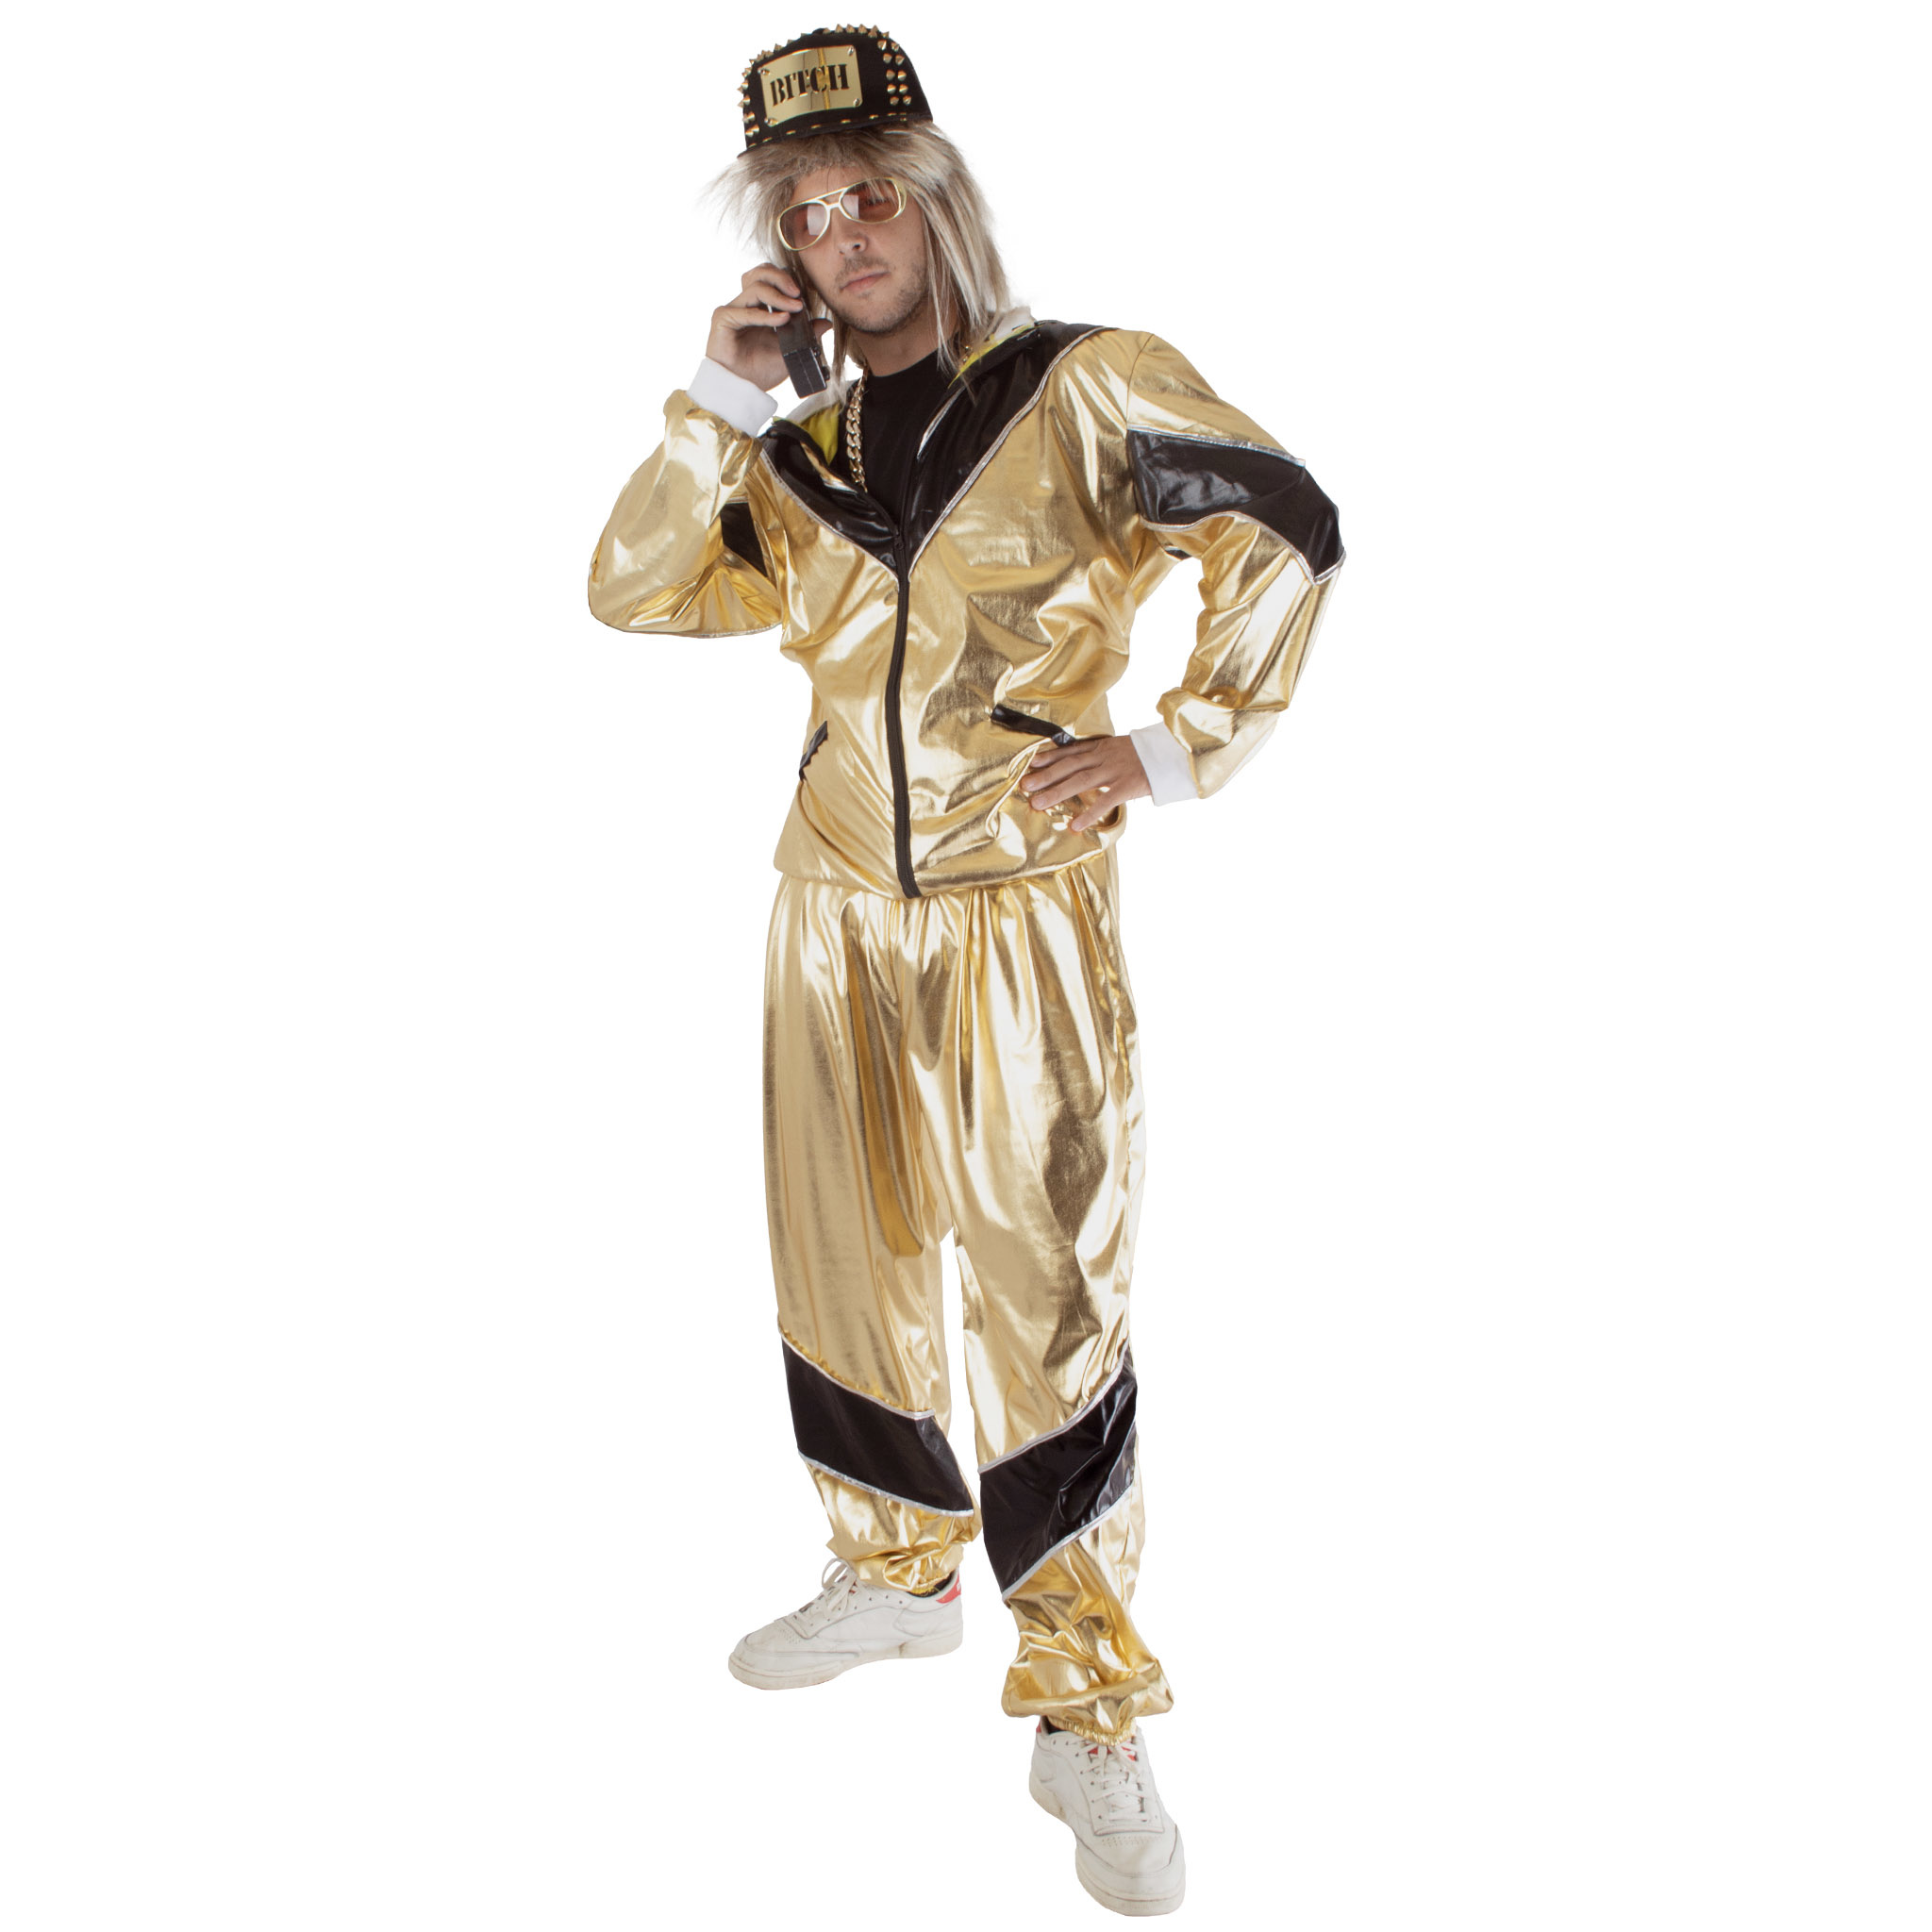 Funny Fashion - Grappig & Fout Kostuum - Wout Fout Goud - Man - zwart,goud - Maat 52-54 - Carnavalskleding - Verkleedkleding